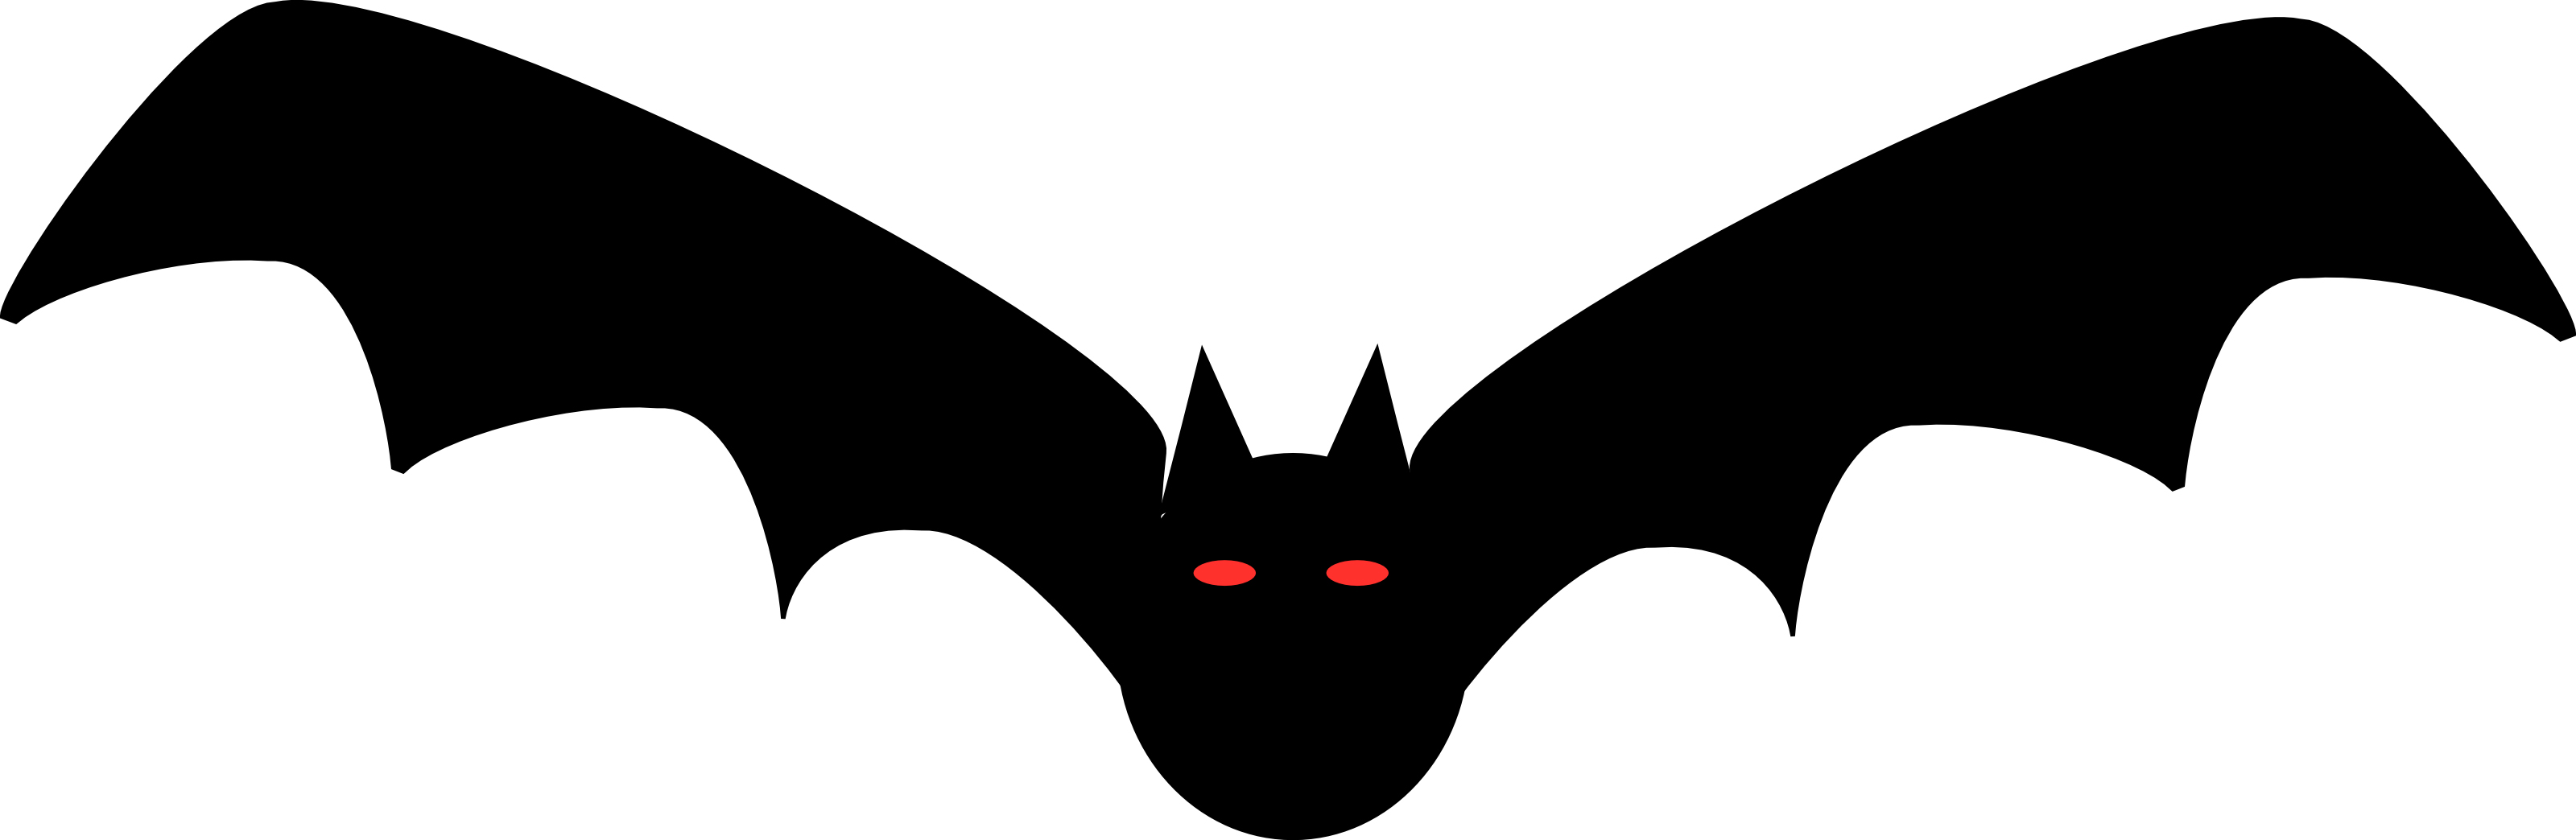 Images For > Vampire Bat Silhouette